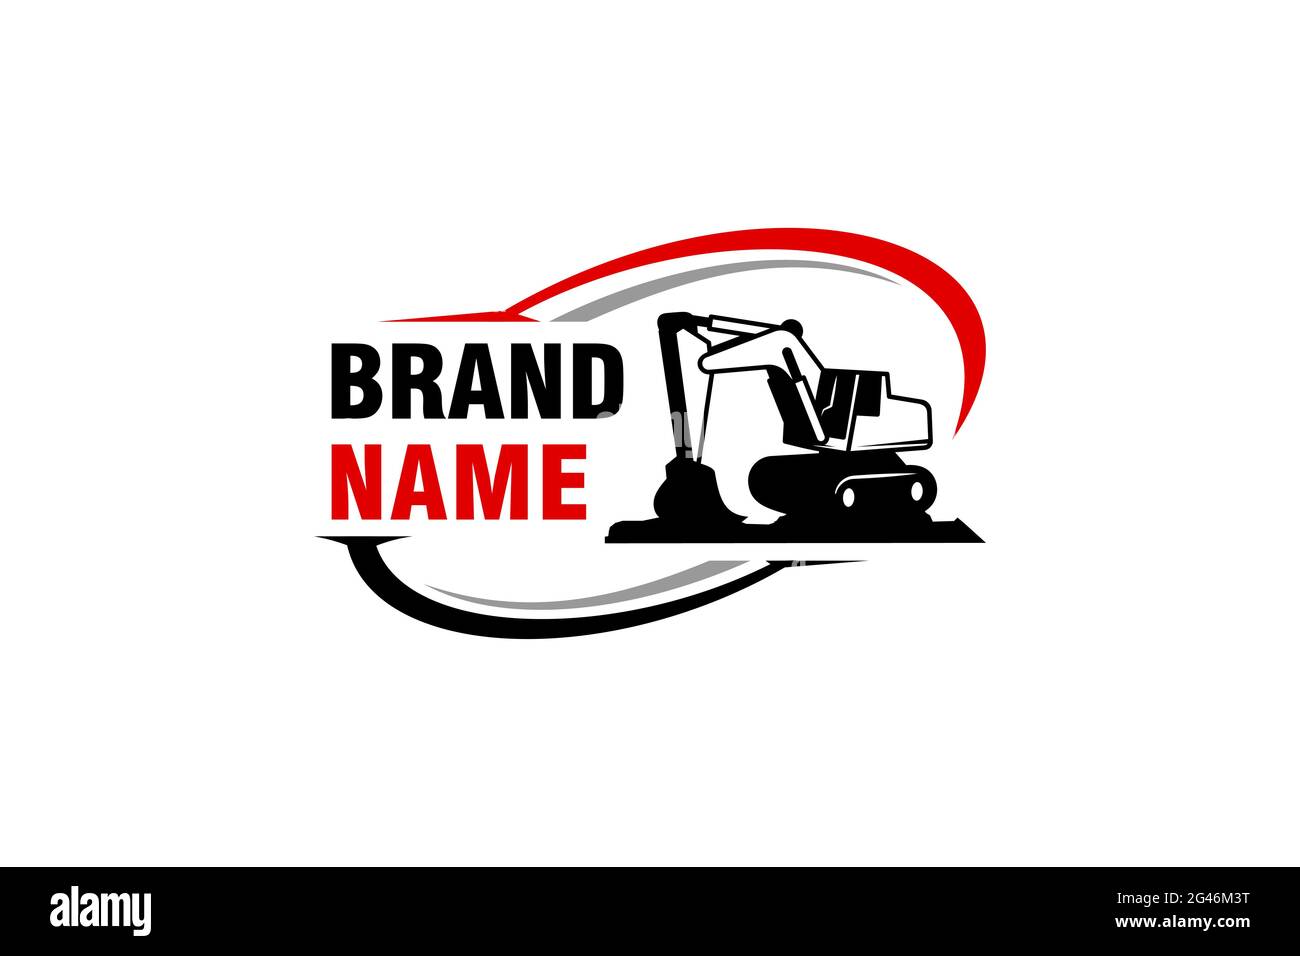 Excavator logo template vector. Heavy equipment logo vector for construction company. Creative excavator illustration for logo. Stock Vector